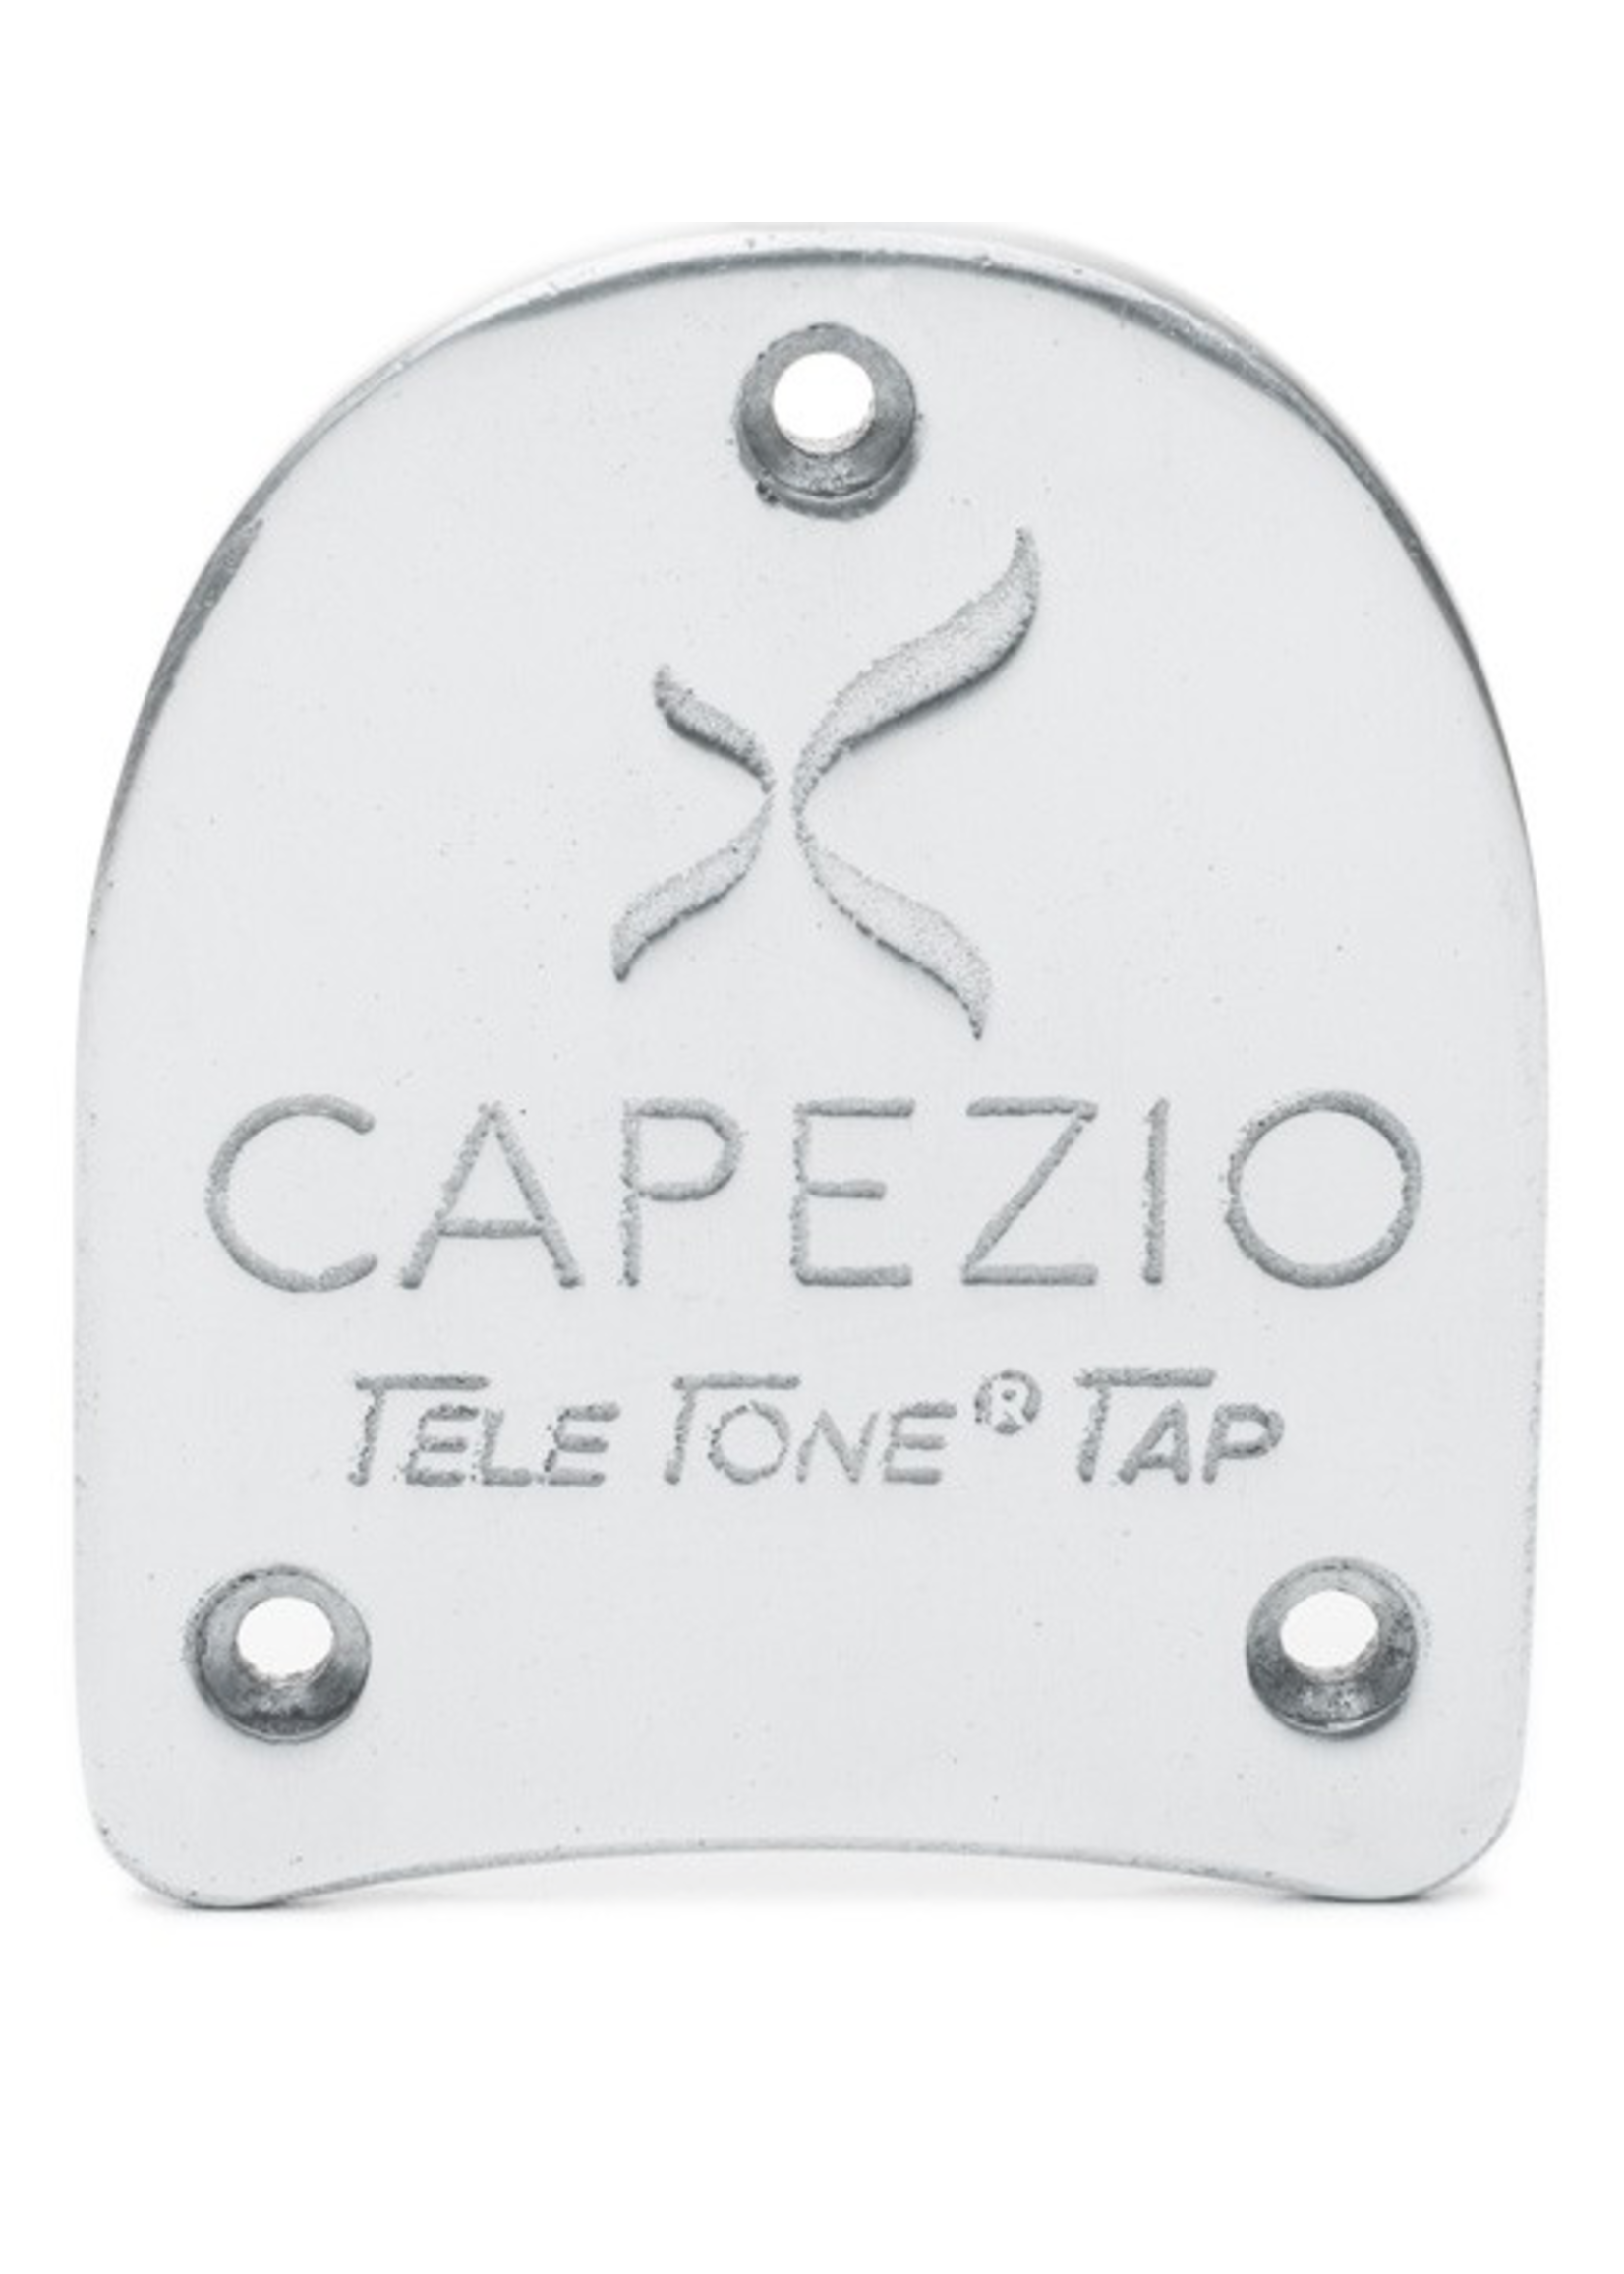 CAPEZIO & BUNHEADS ATTH TELETONE HEEL TAPS